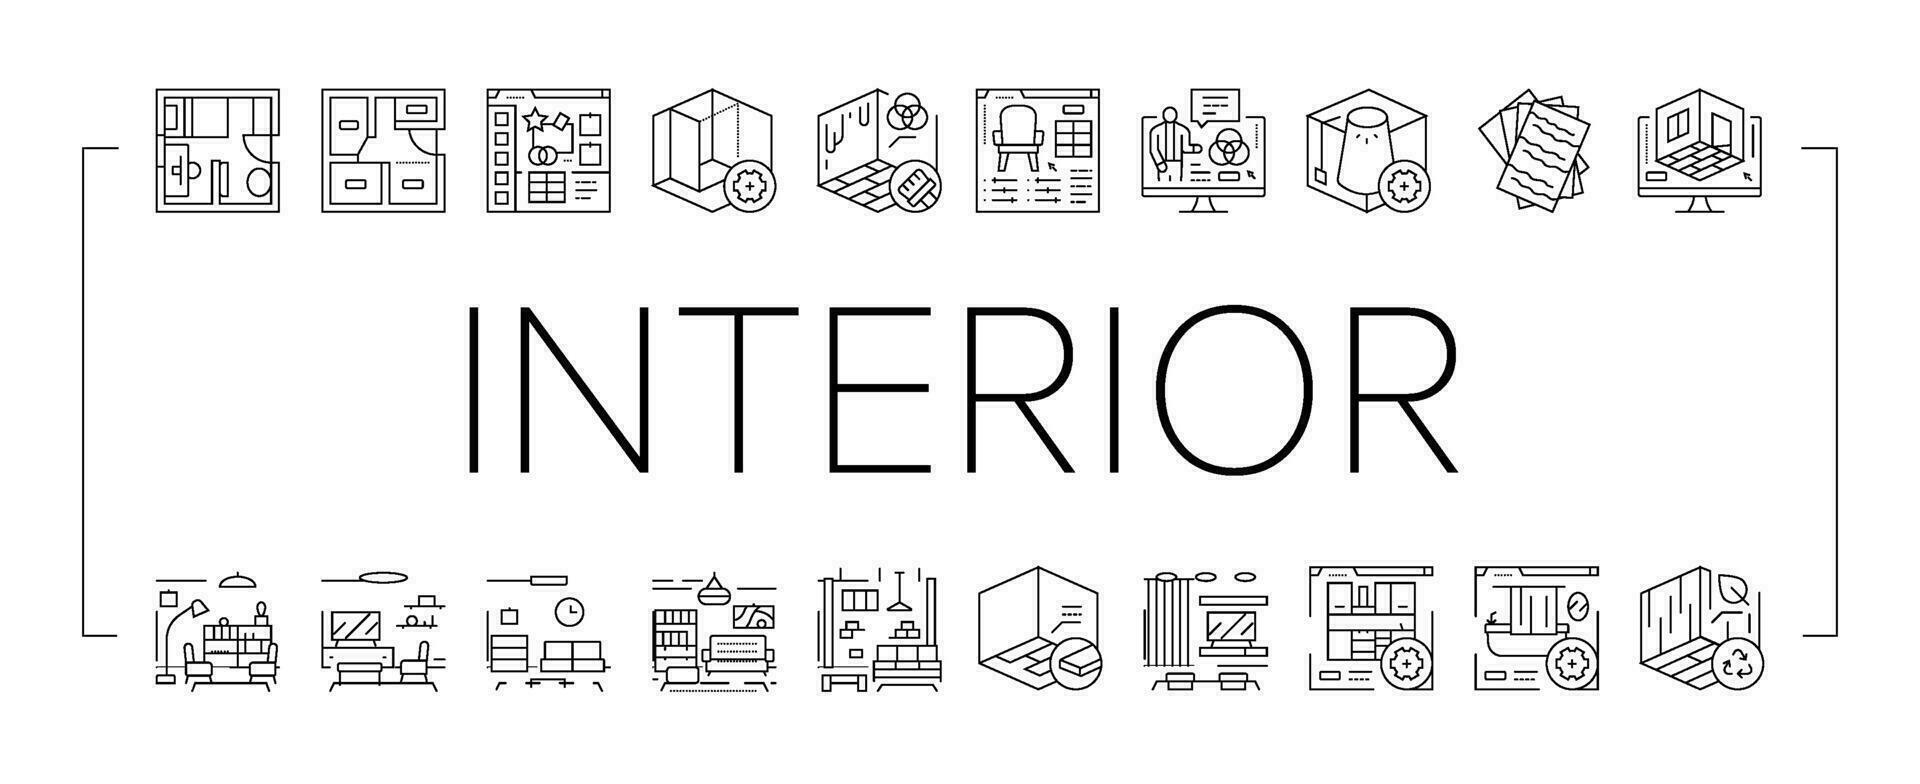 interior designer office icons set vector